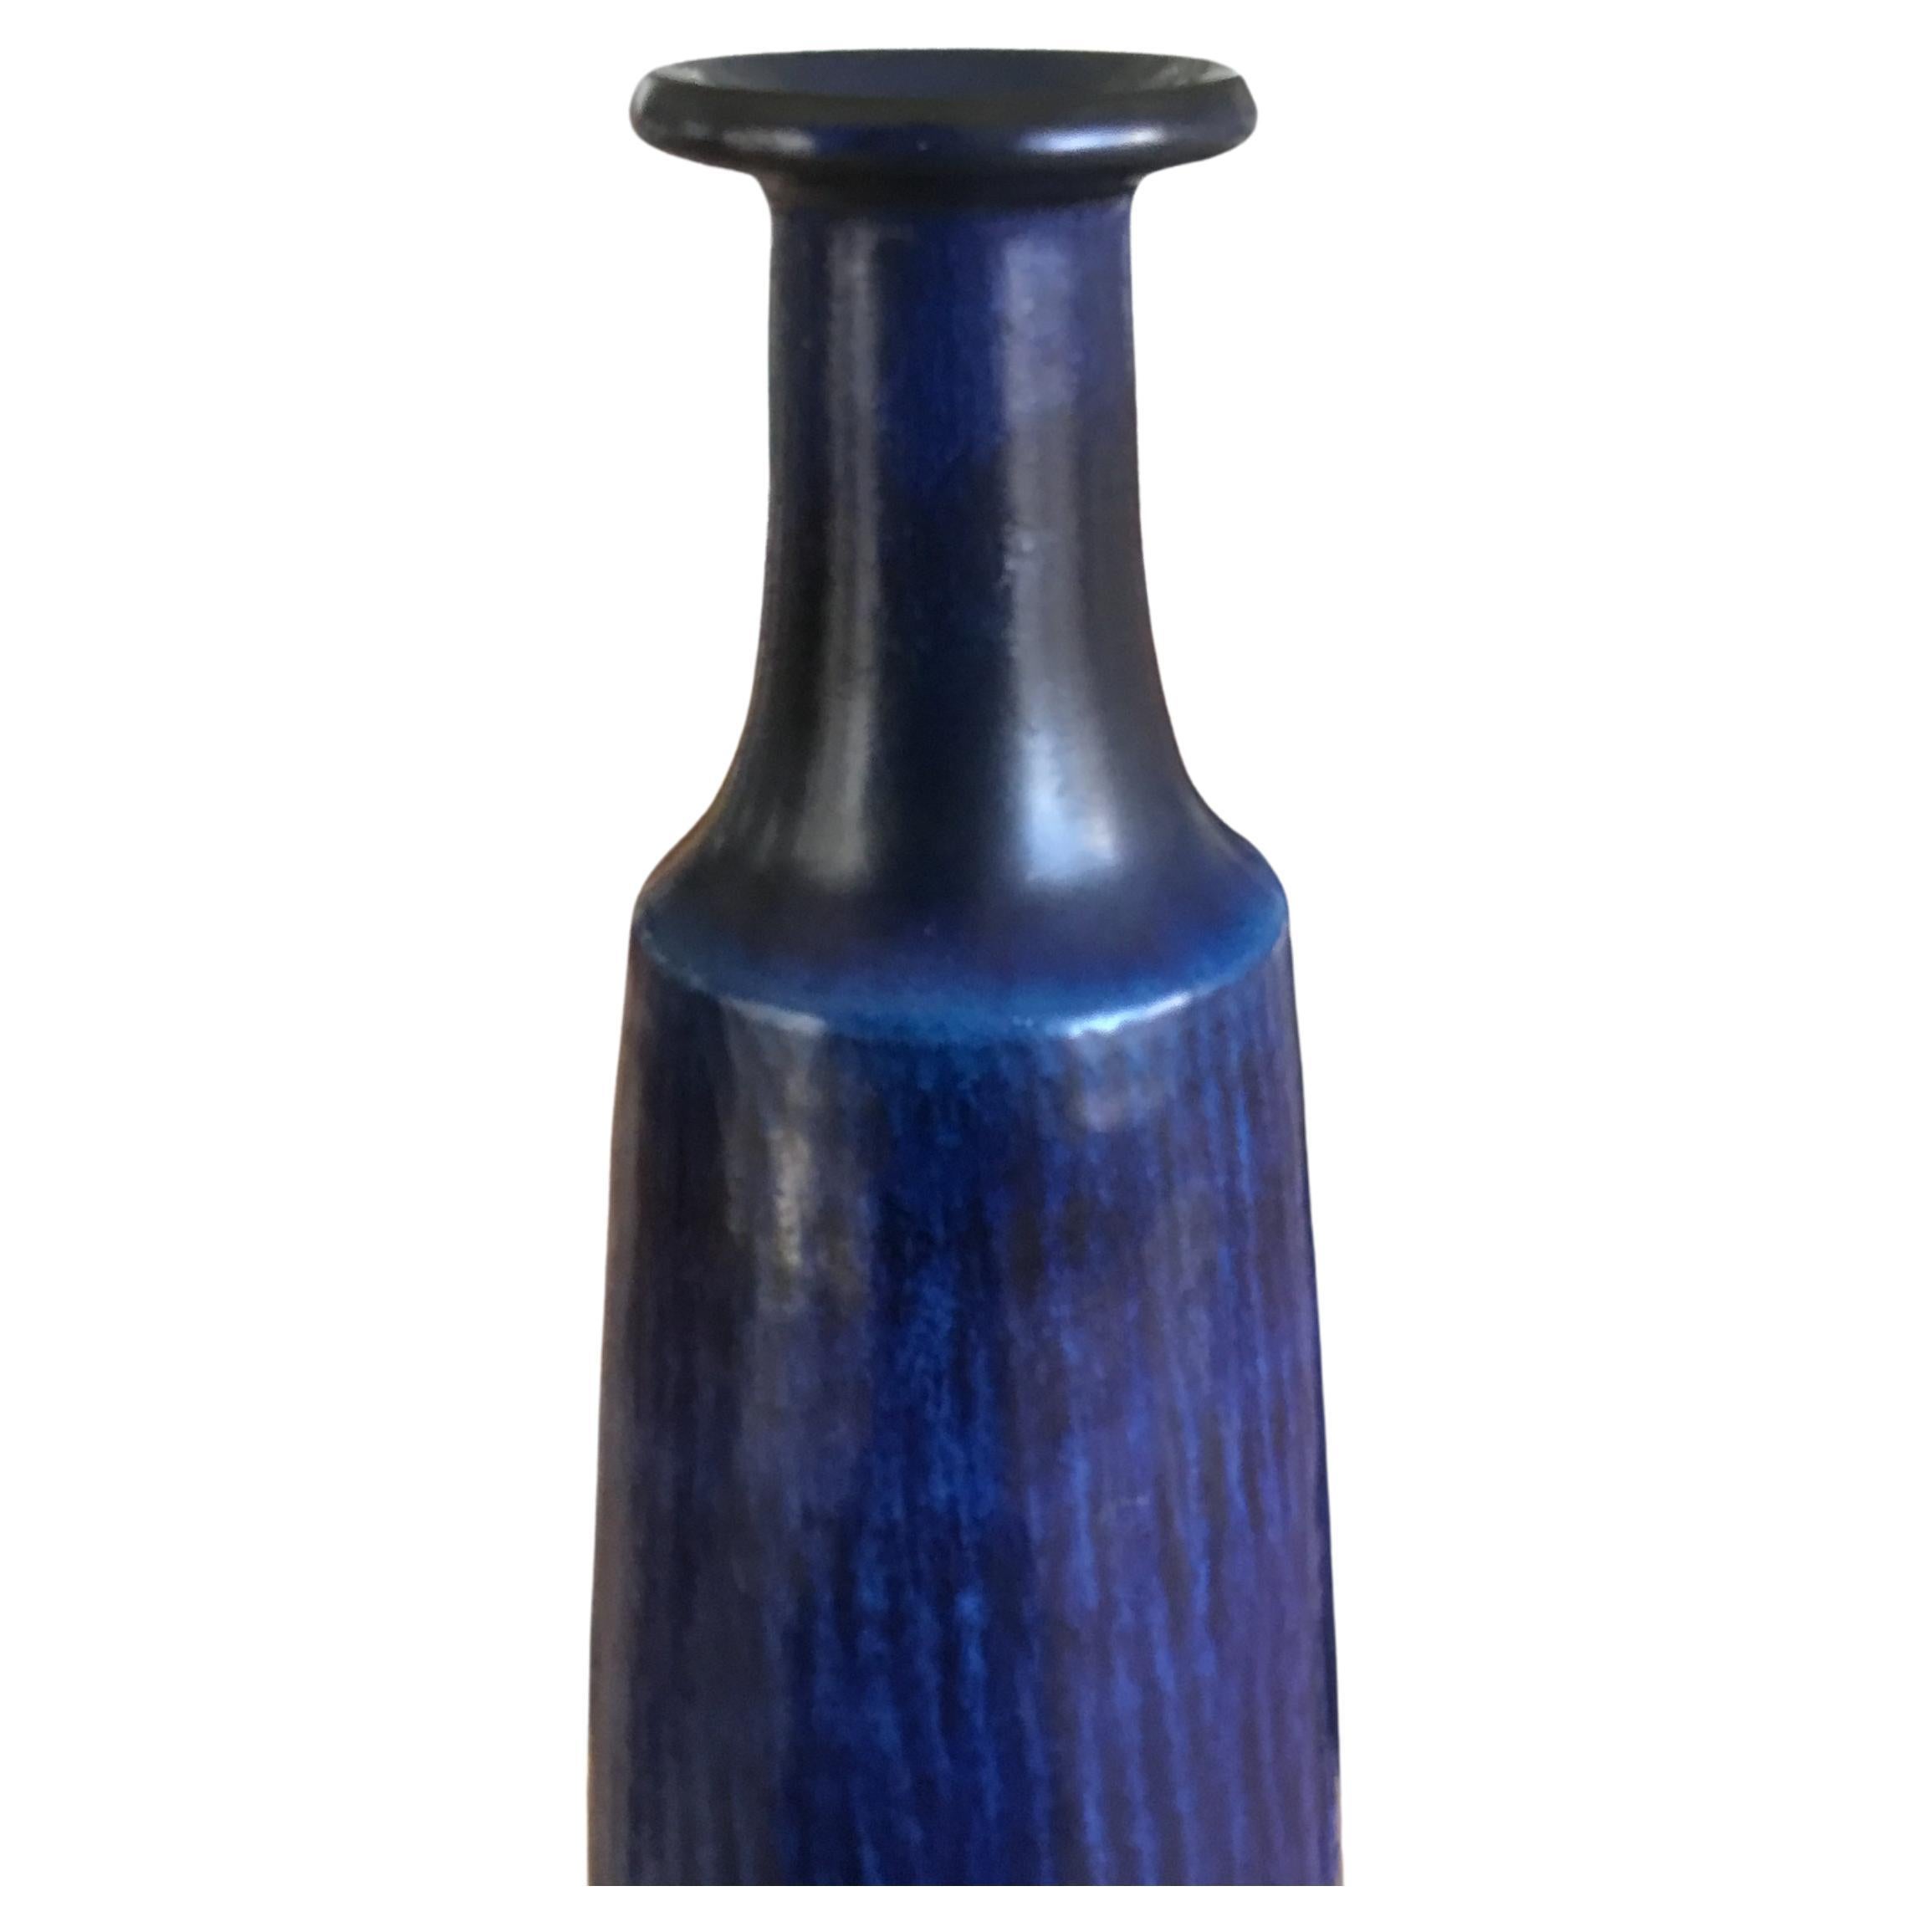 Mid-Century Modern Very Tall Gunnar Nylund Vase by Nymølle with Dark Blue Glaze 1960s For Sale